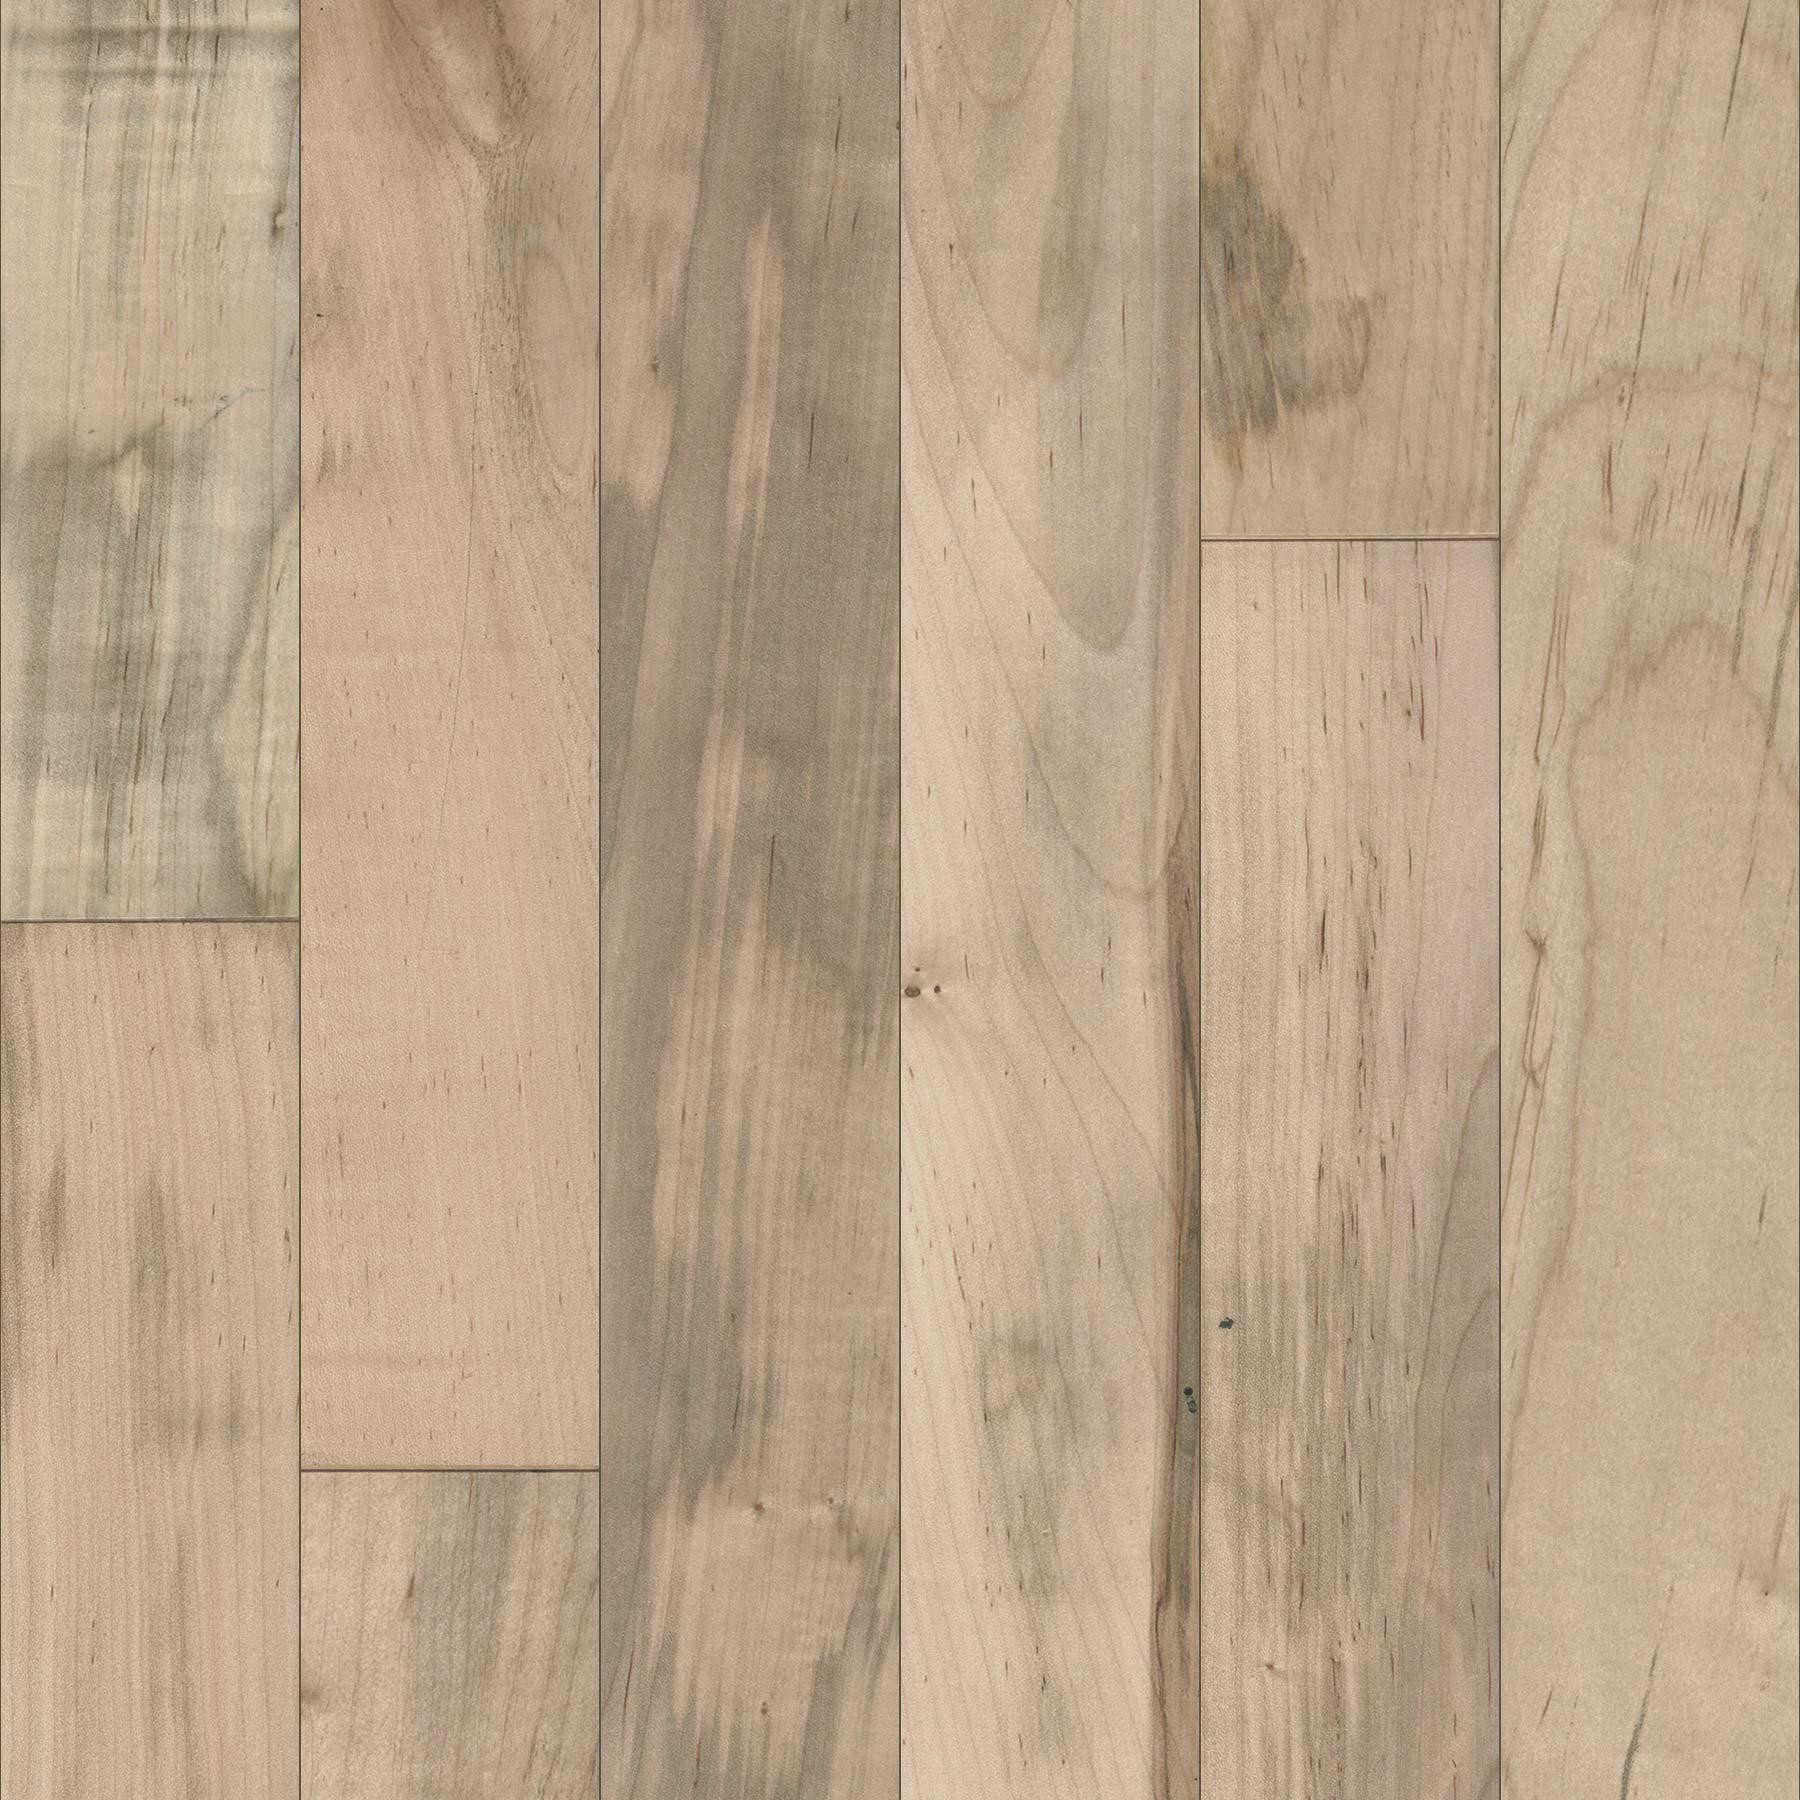 red oak hardwood flooring grades of kingsmill natural maple 3 wide 3 4 solid hardwood flooring for natural maple m unat3 3 x 55 approved